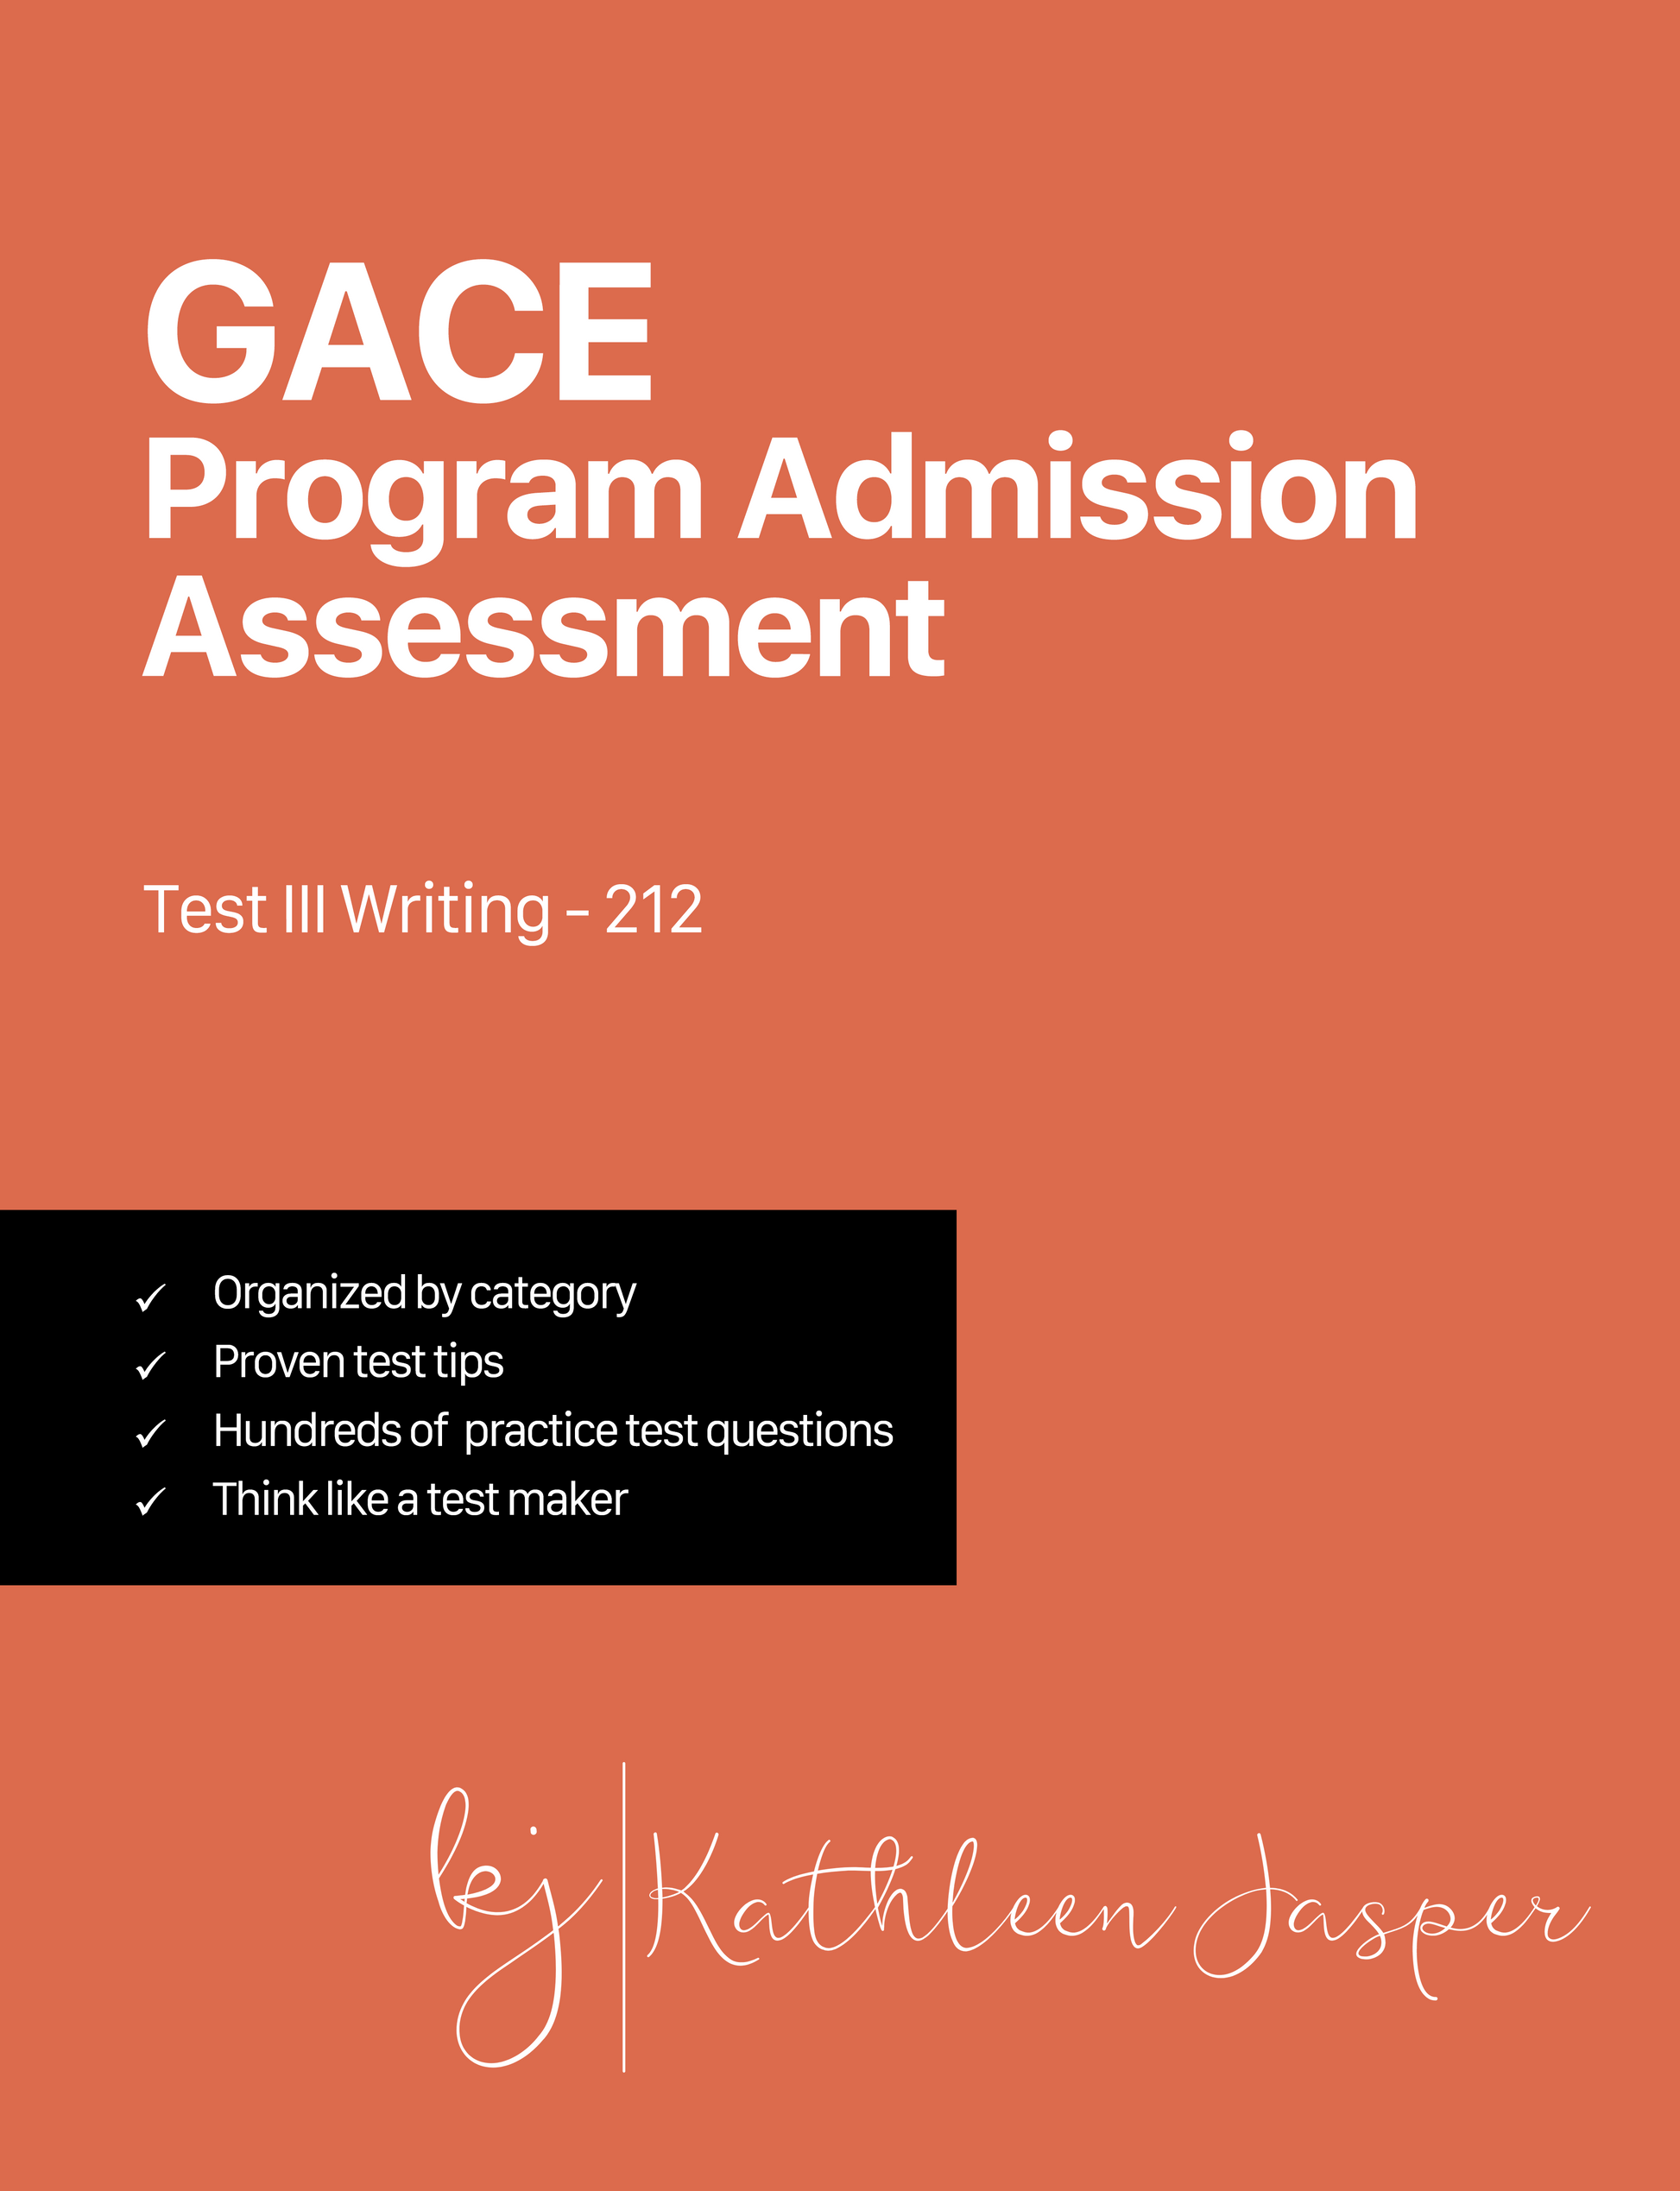 GACE Program Admission Assessment Test III Writing 212